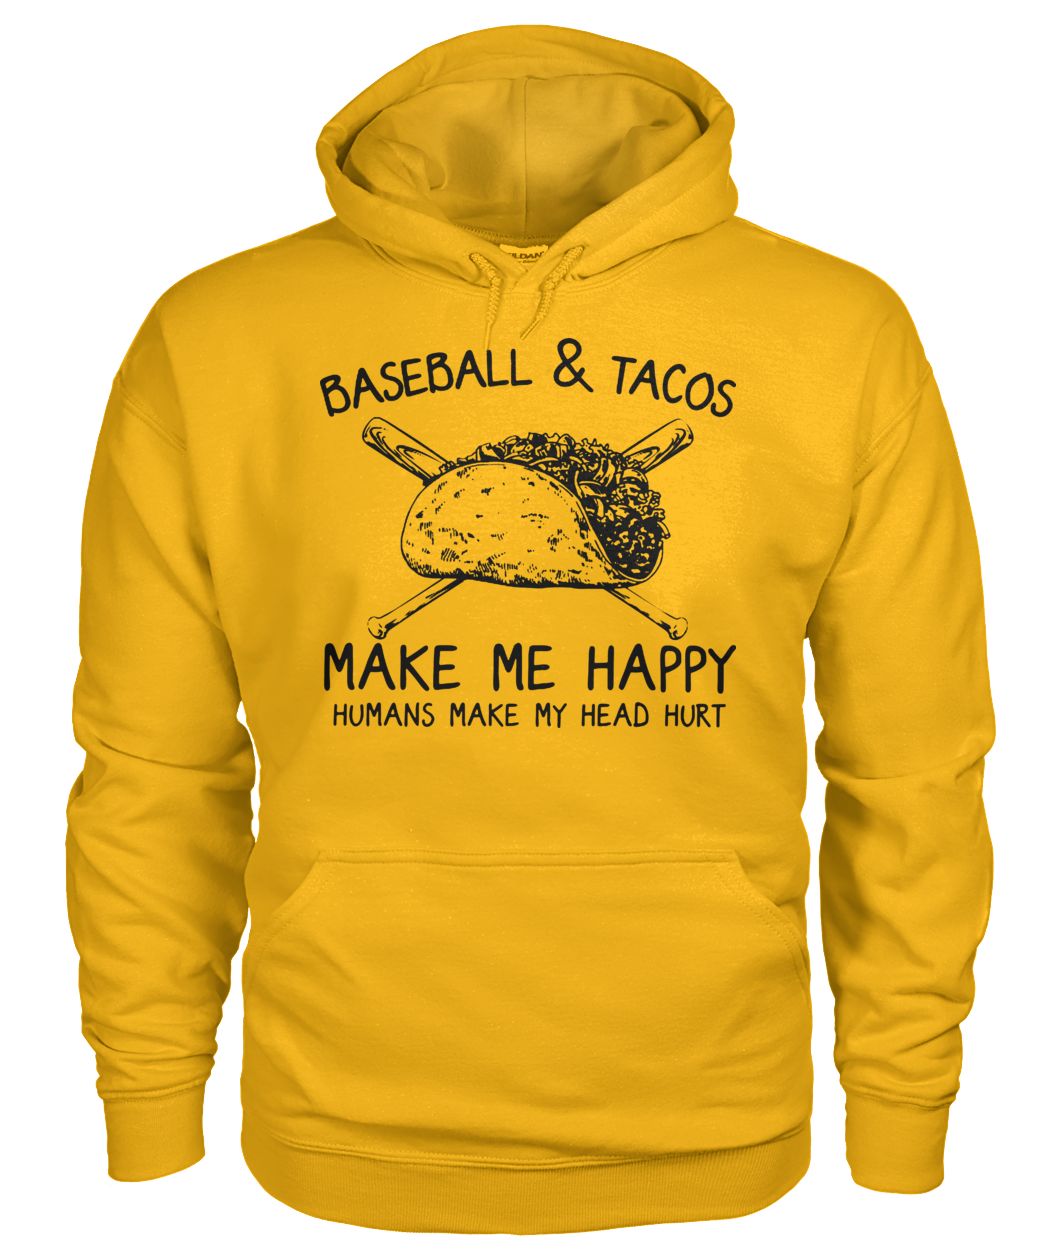 Baseball and tacos make me happy humans make my head hurt hoodie